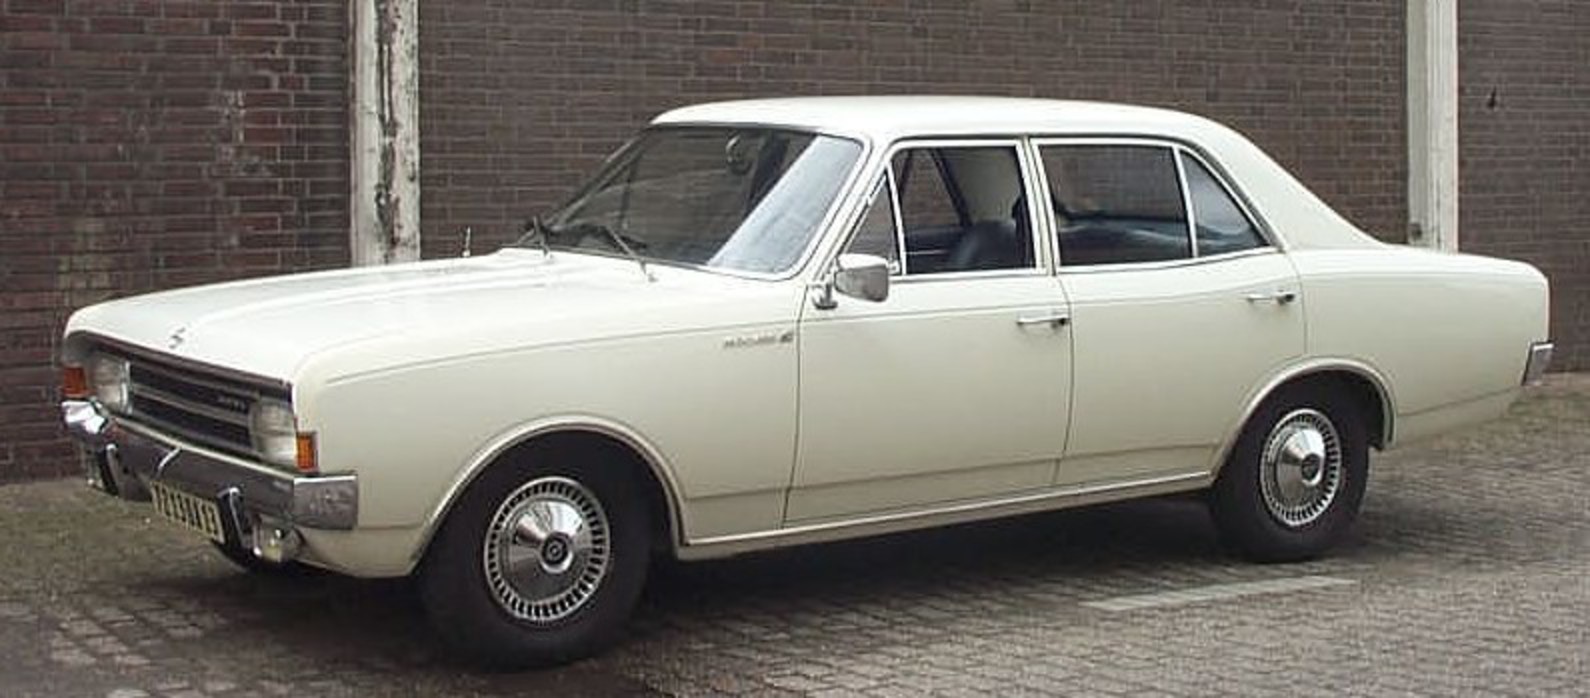 Opel_Rekord_C_1900_L_white_1967.jpg â€Ž(795 Ã— 349 pixels, file size: 83 KB,